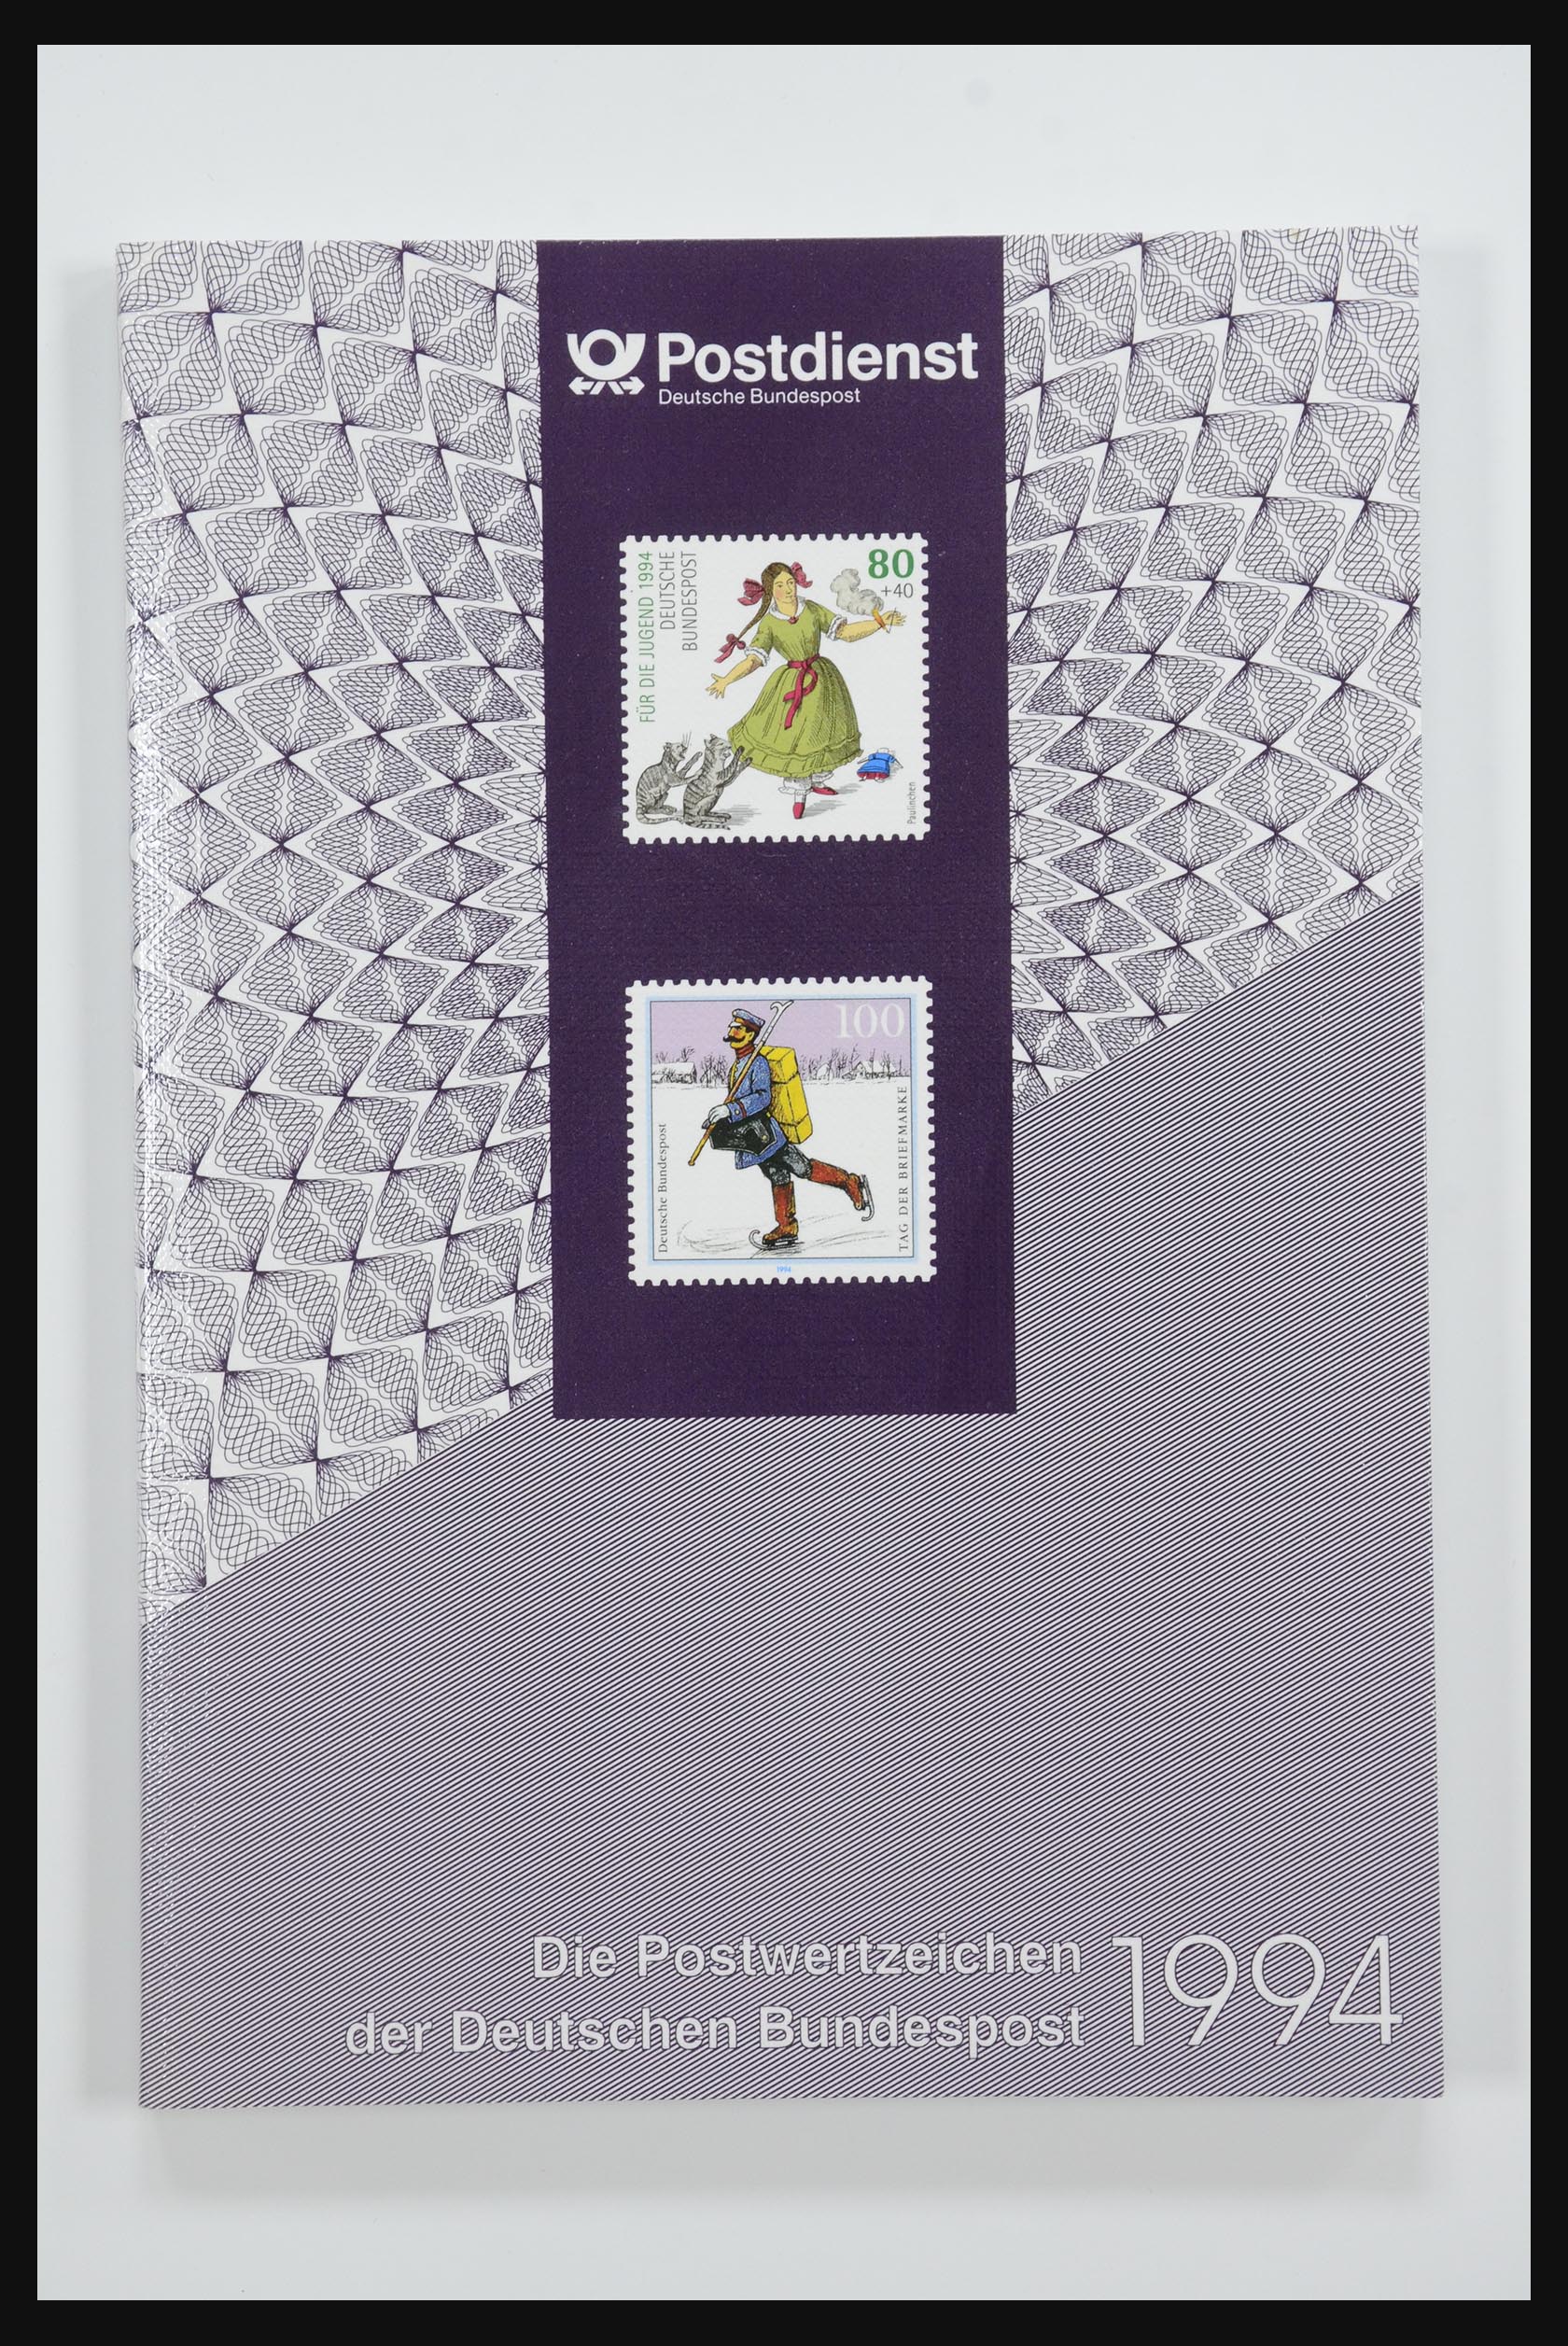 31834 022 - 31834 Bundespost yearbooks 1973(!)-1999.